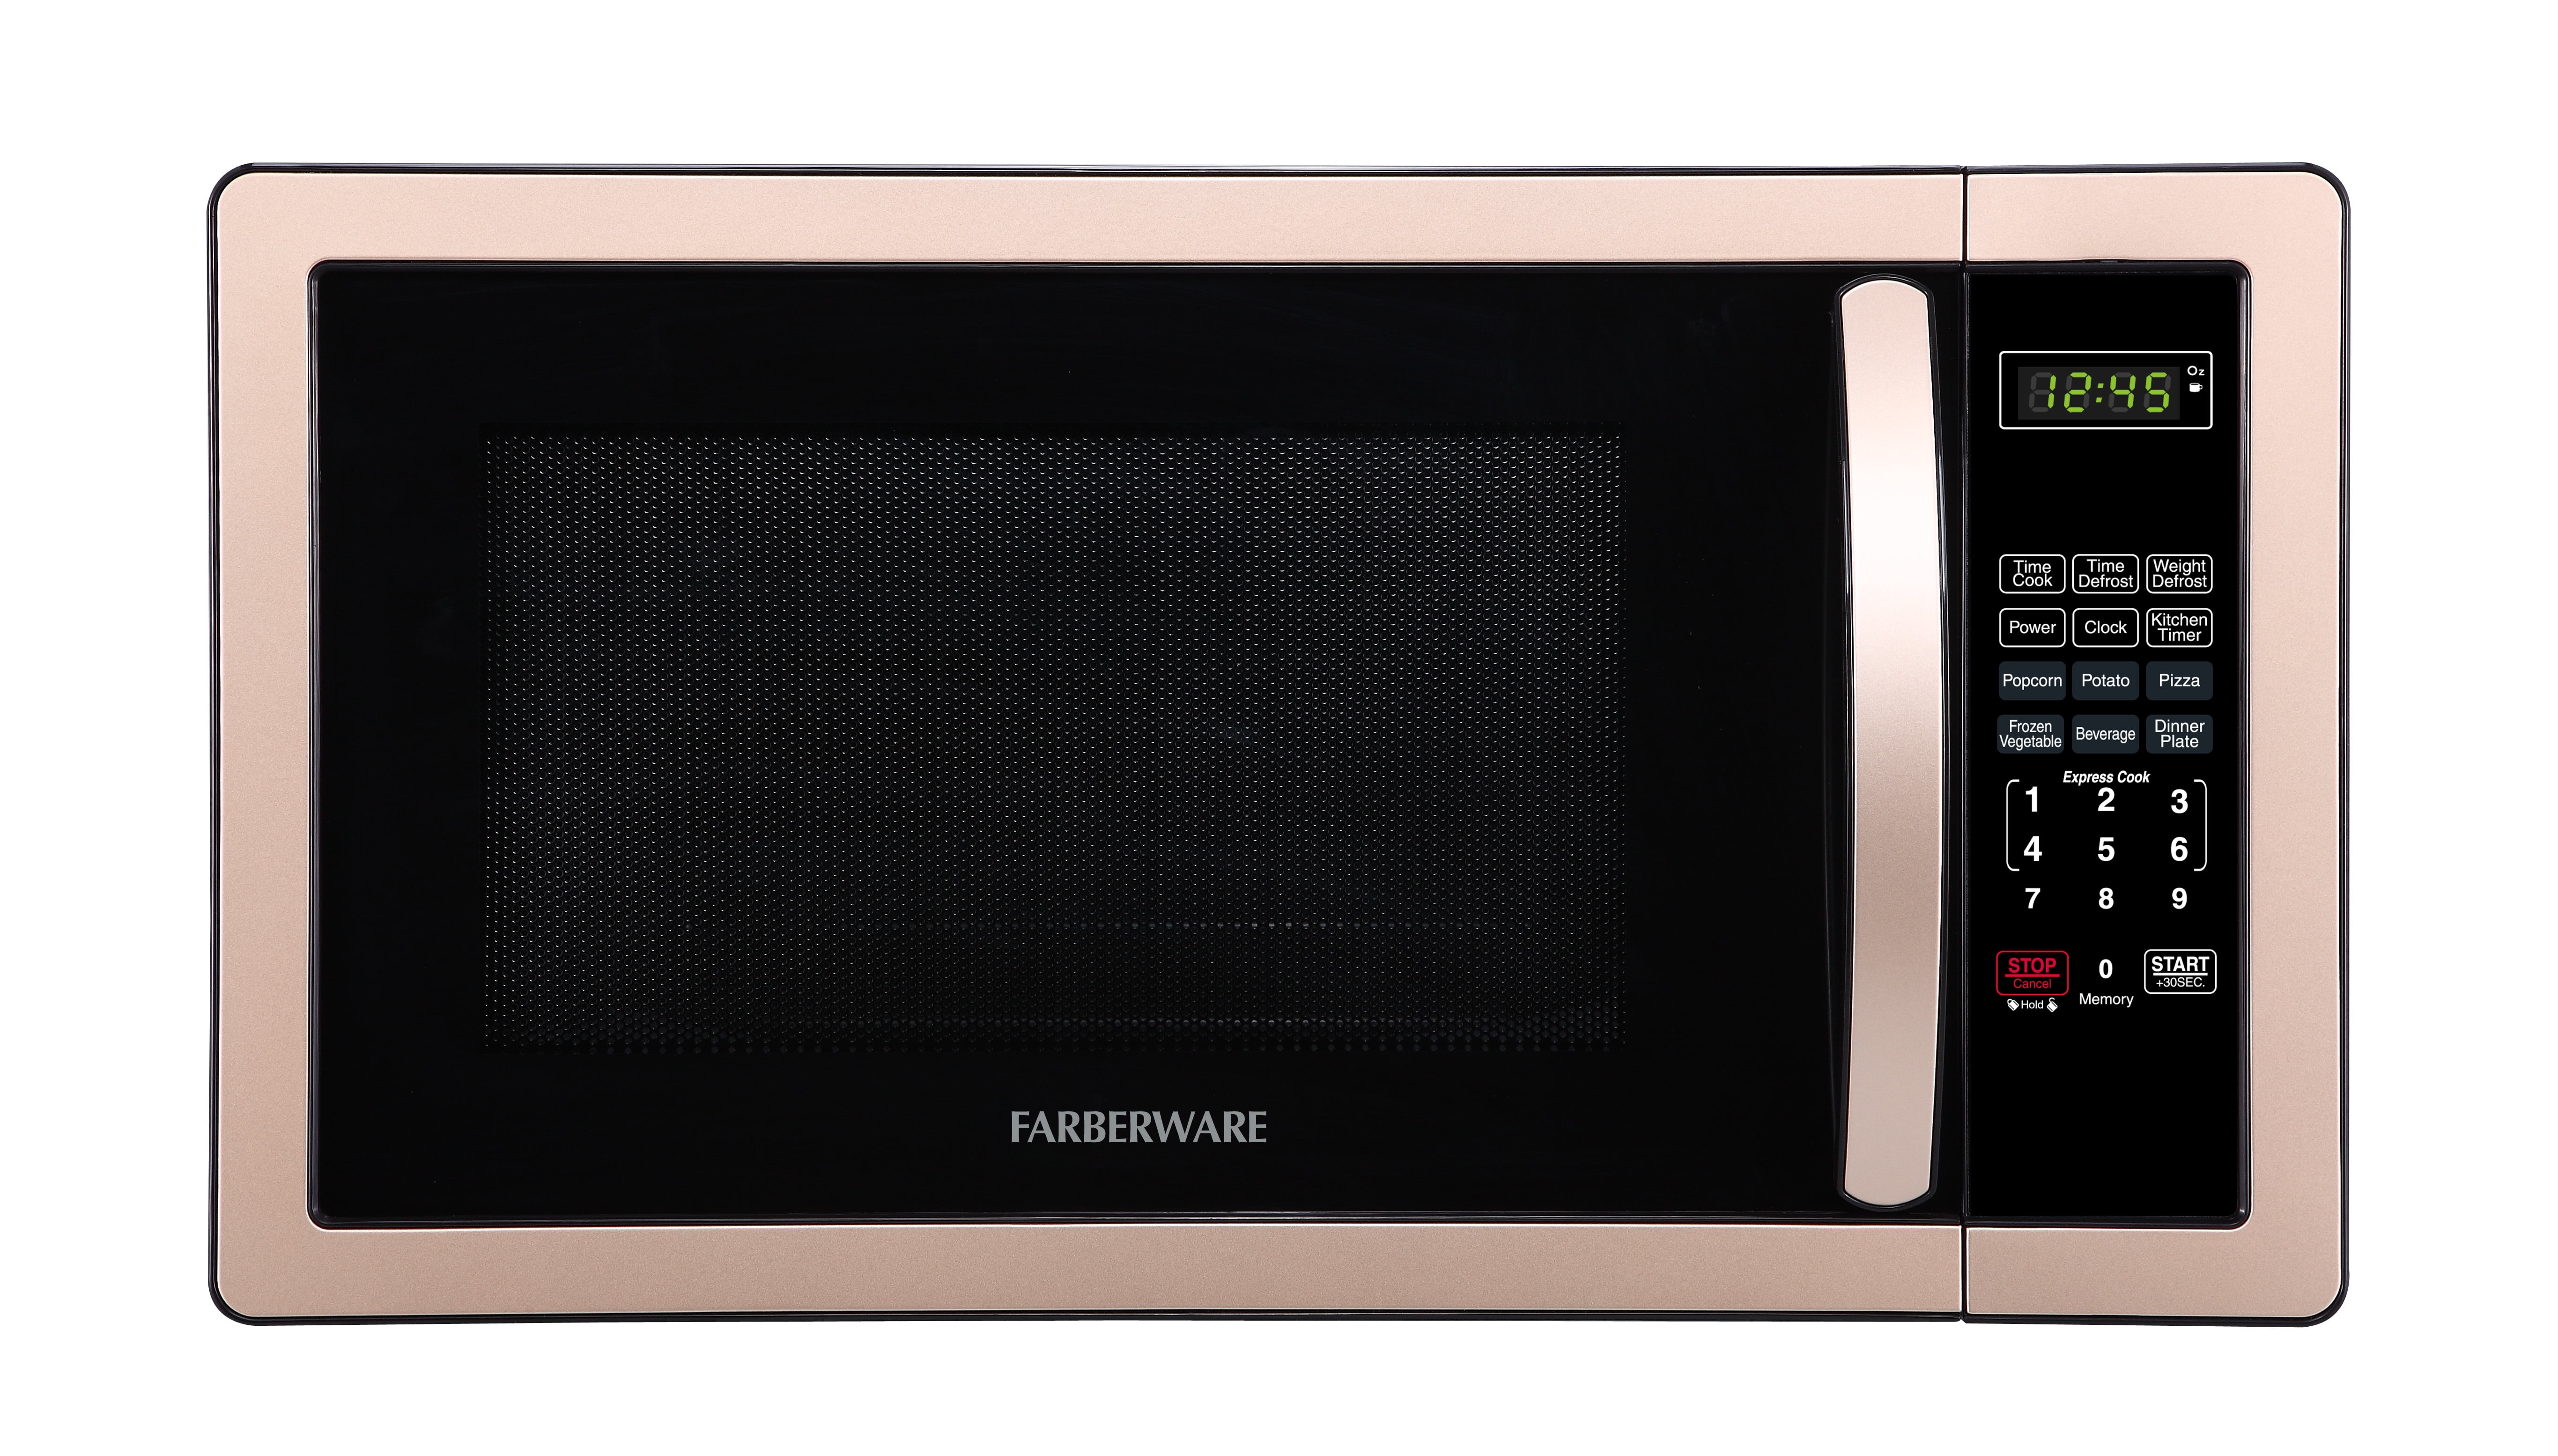 Farberware White & Platinum Classic 1000-Watt Microwave Oven 1.1 cu.ft.